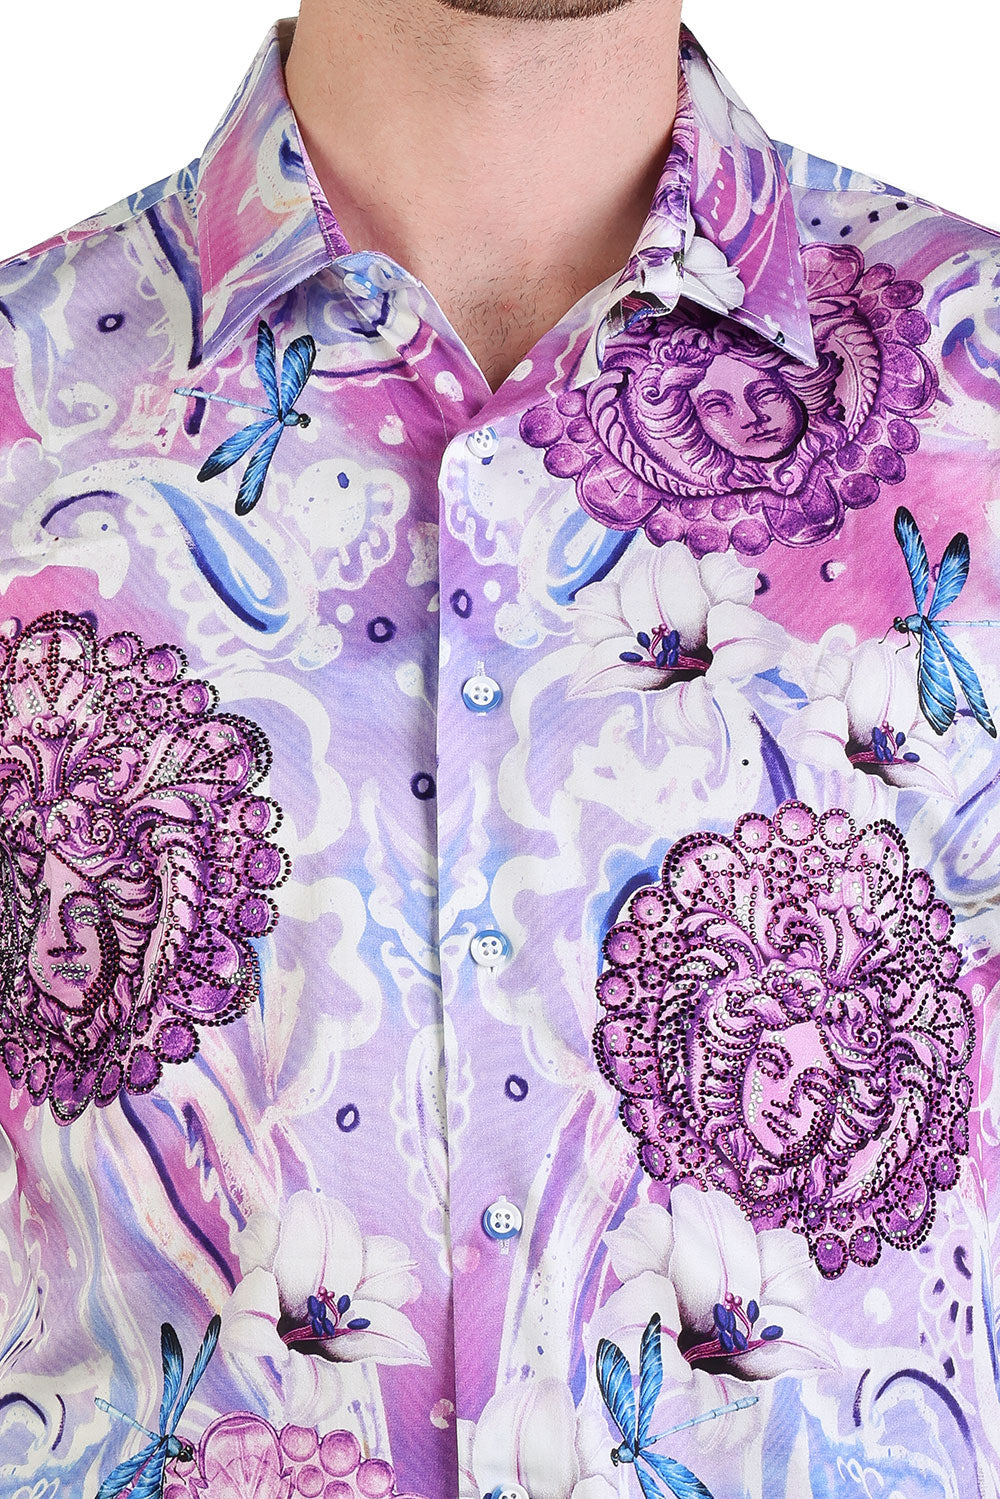 BARABAS Men's medusa paisley rhinestones graphic short sleeve shirt SSR19 purple